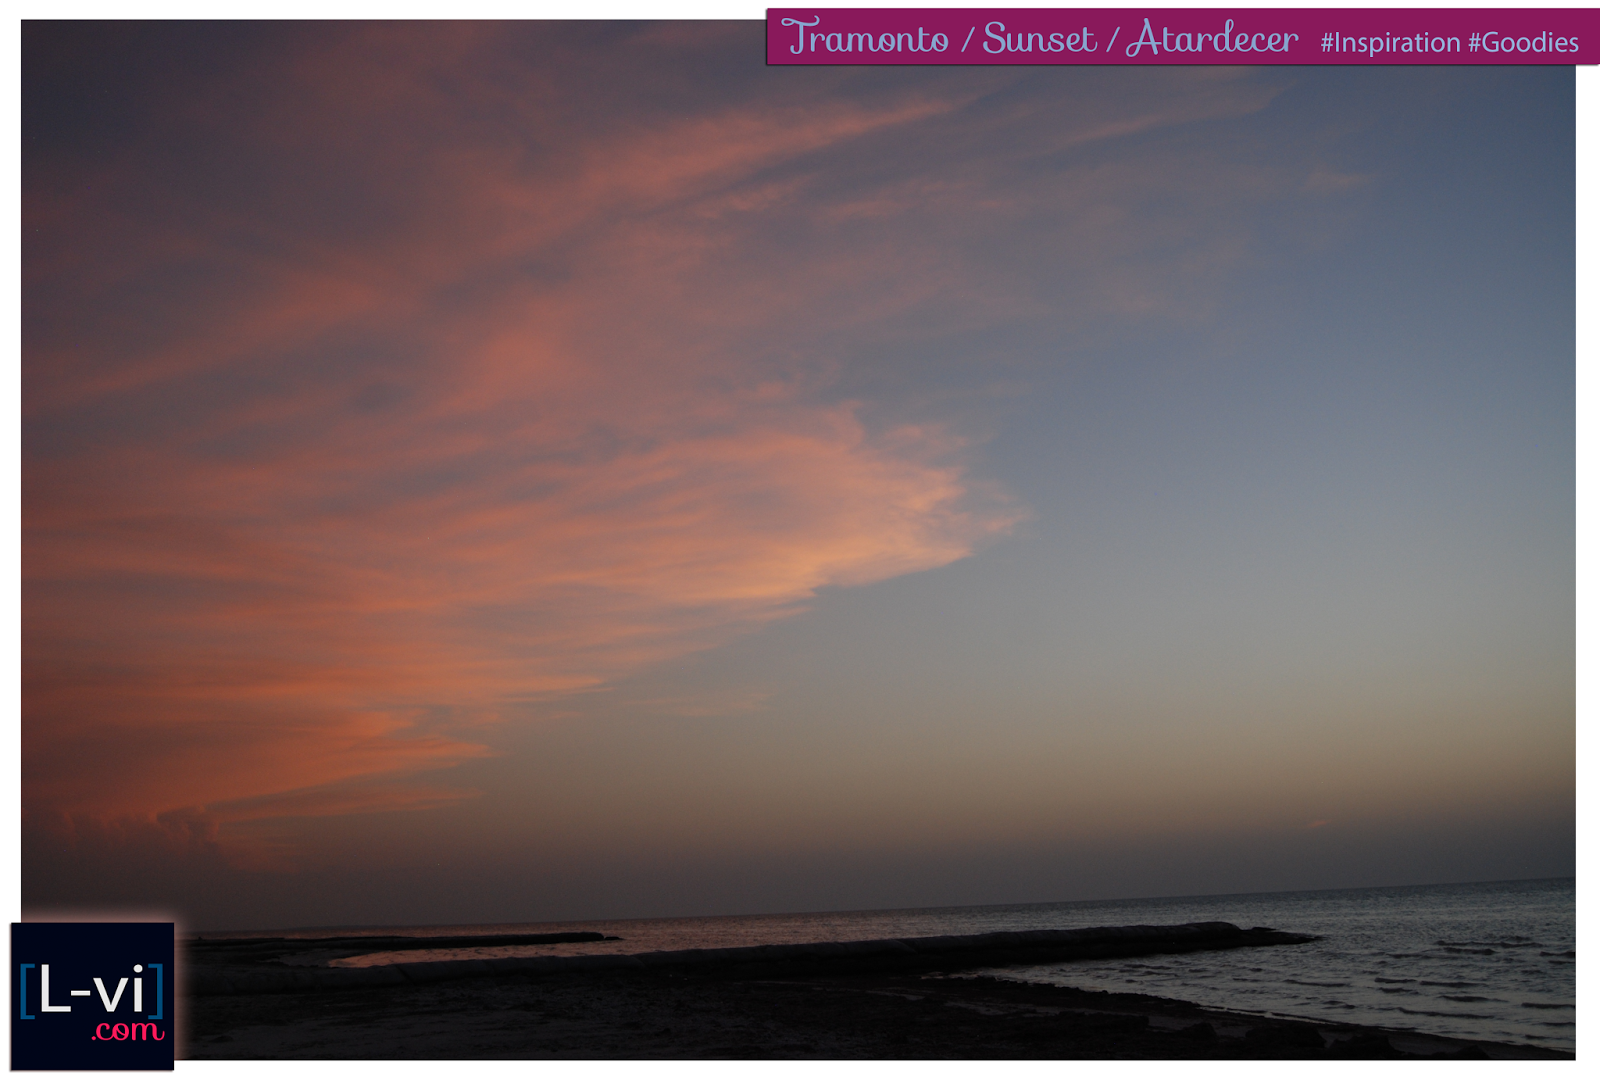 [Holbox] Tramonto/ Sunset/ Atardecer  by Lucebuona©.  L-vi.com